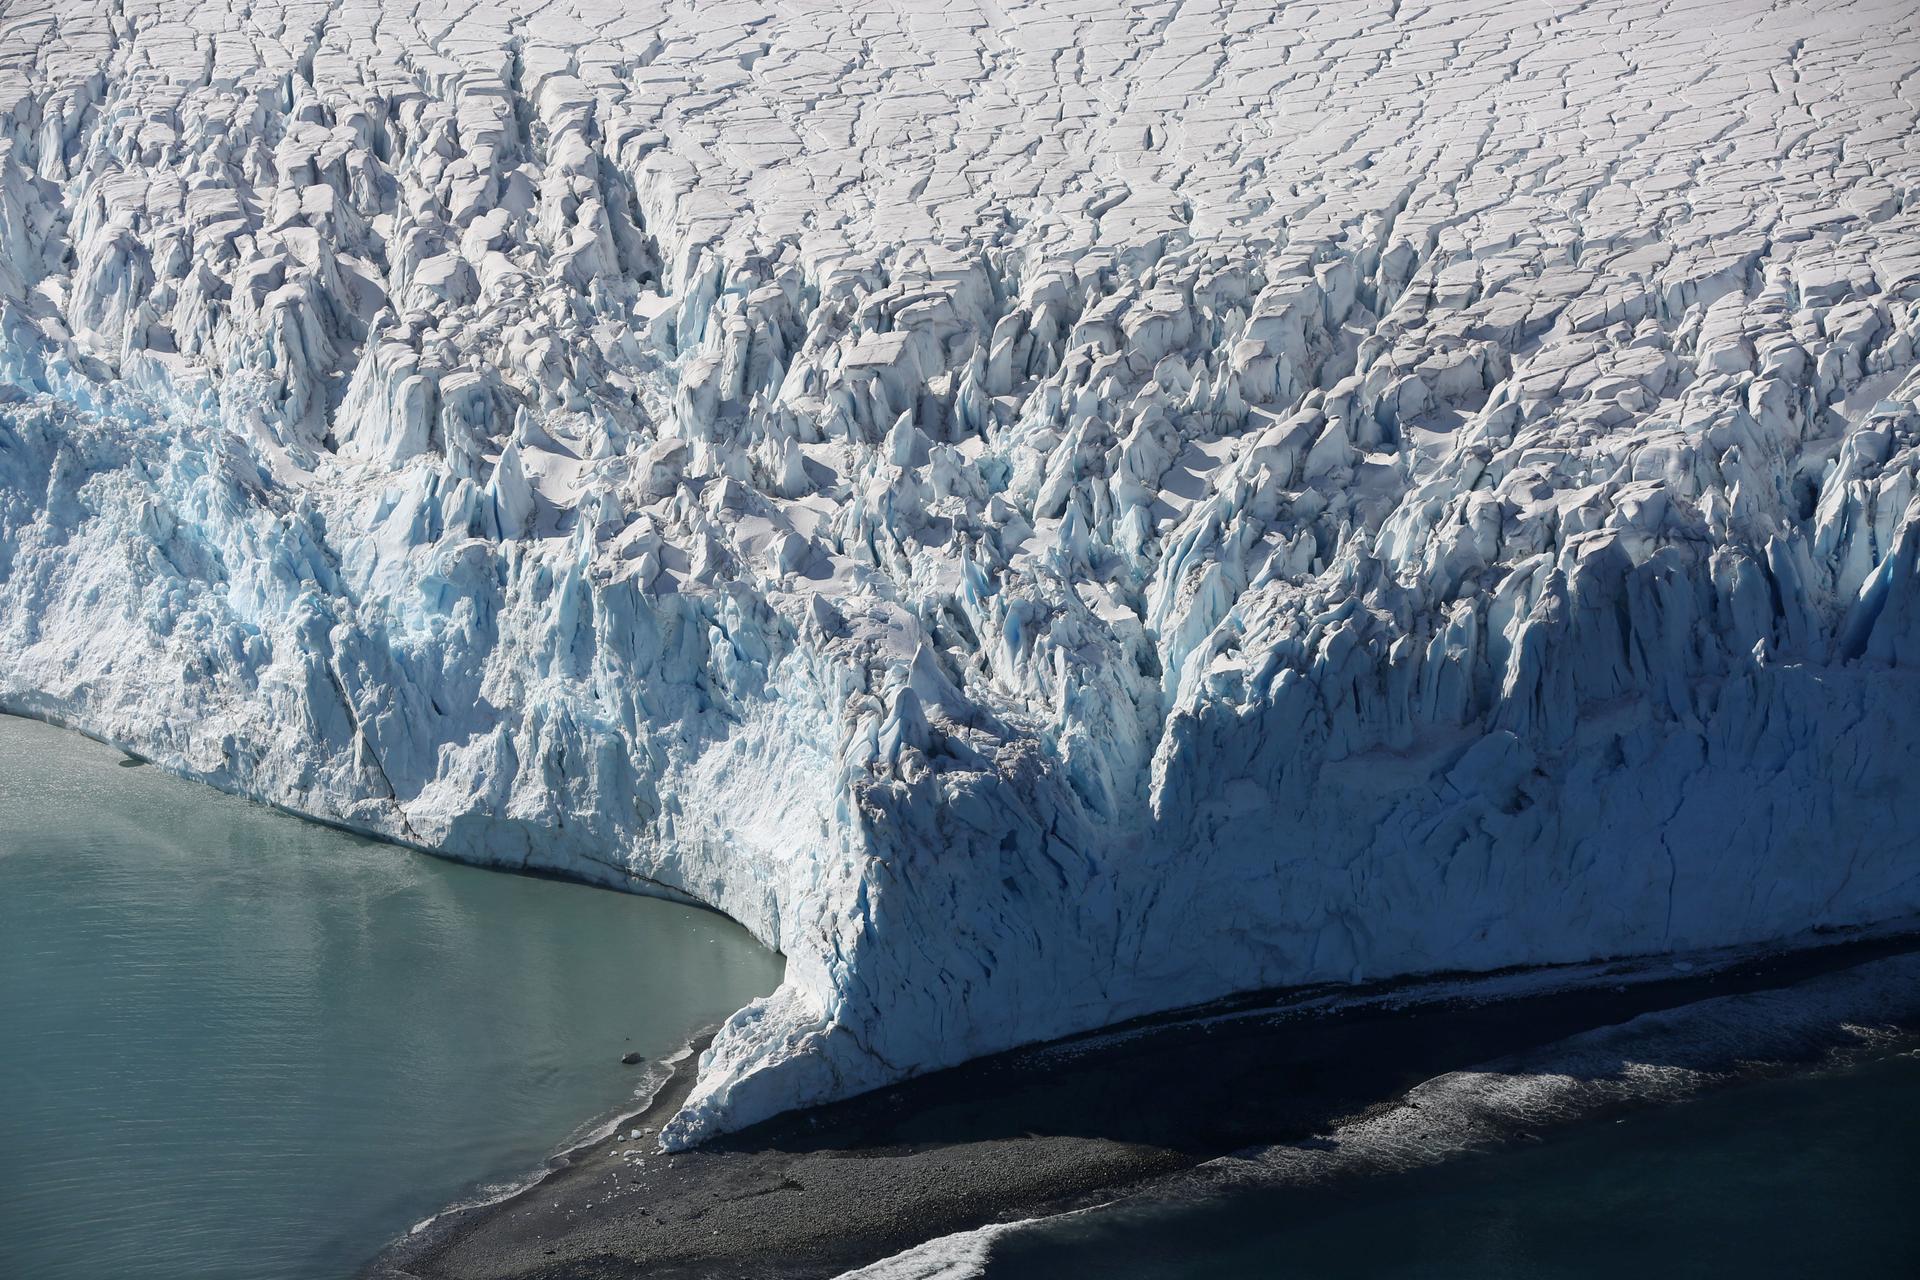 A glacier is seen from overhead in Half Moon Bay, Antarctica.